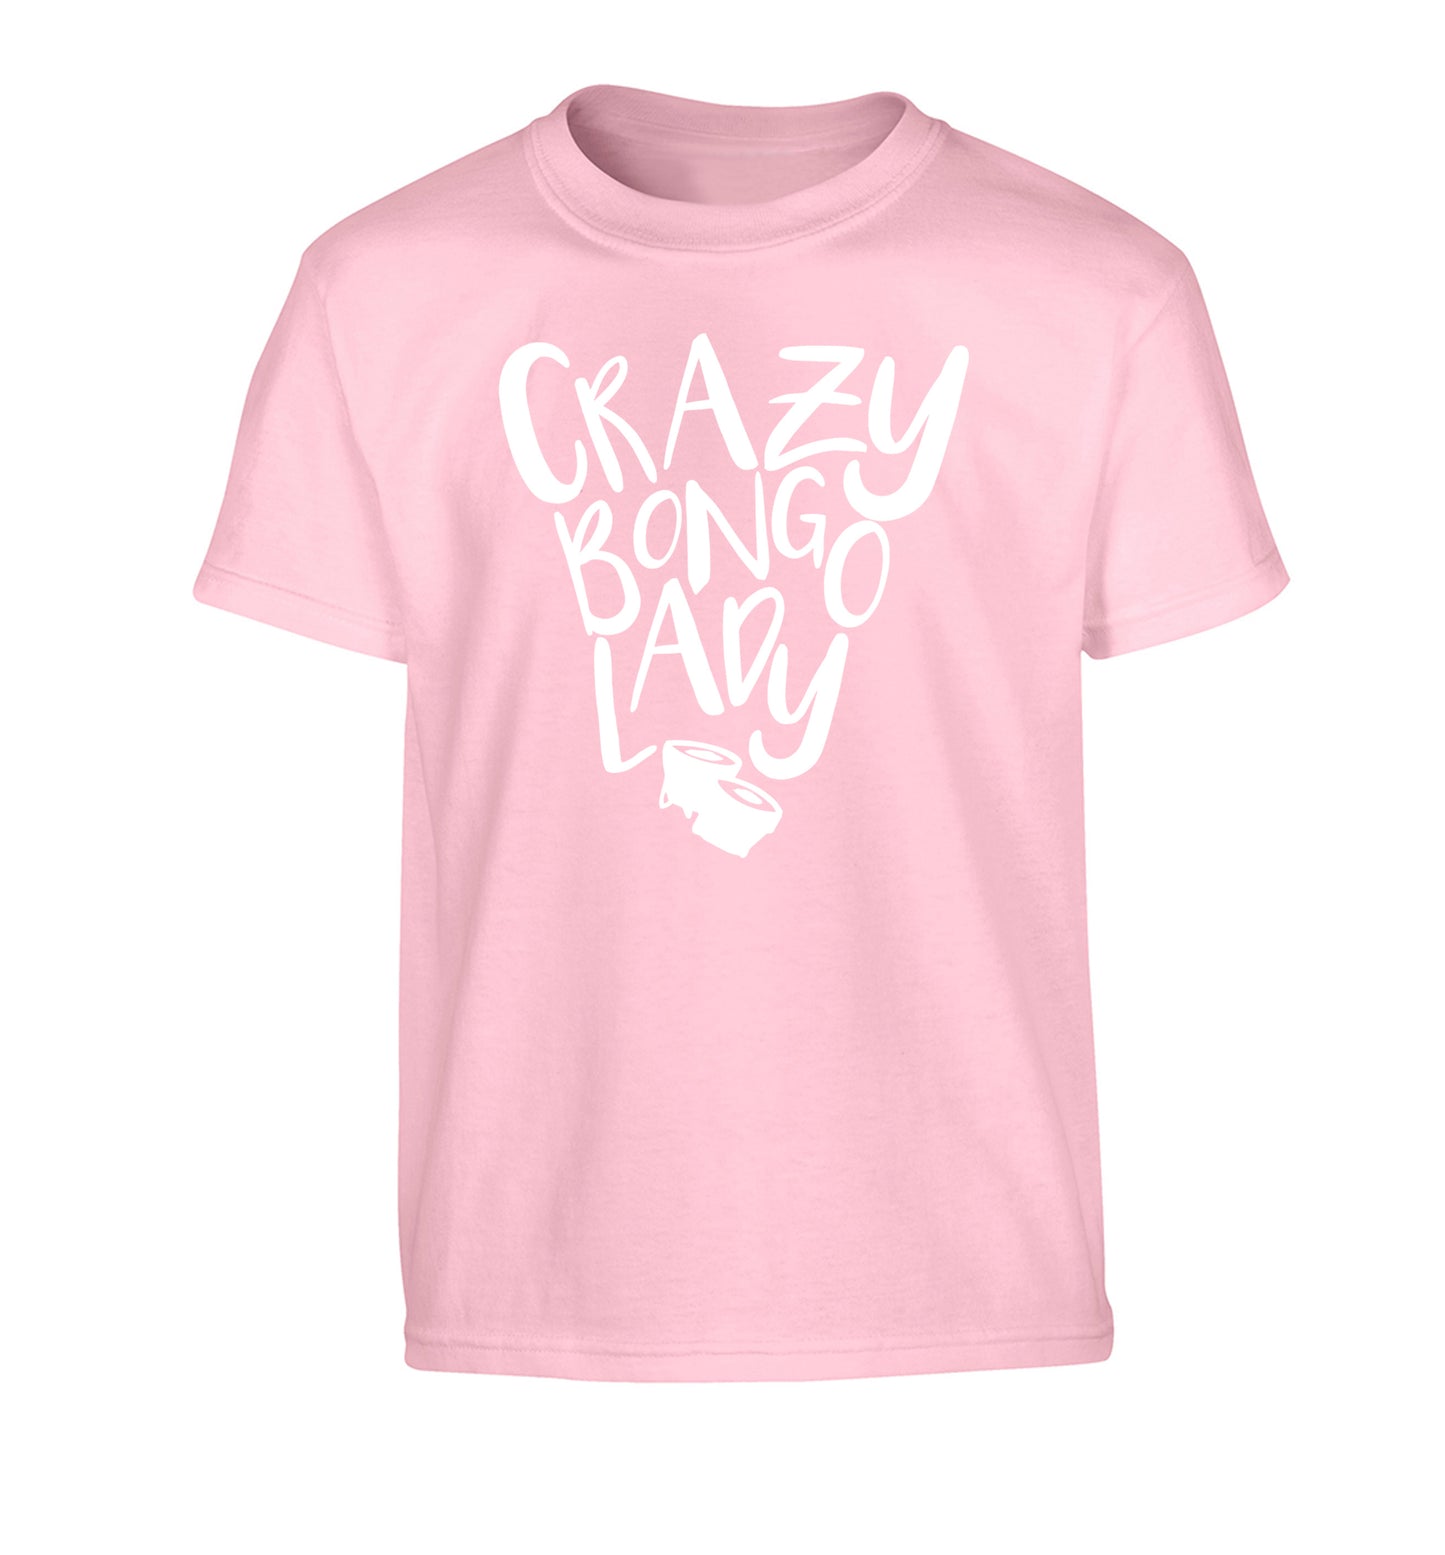 Crazy bongo lady Children's light pink Tshirt 12-14 Years